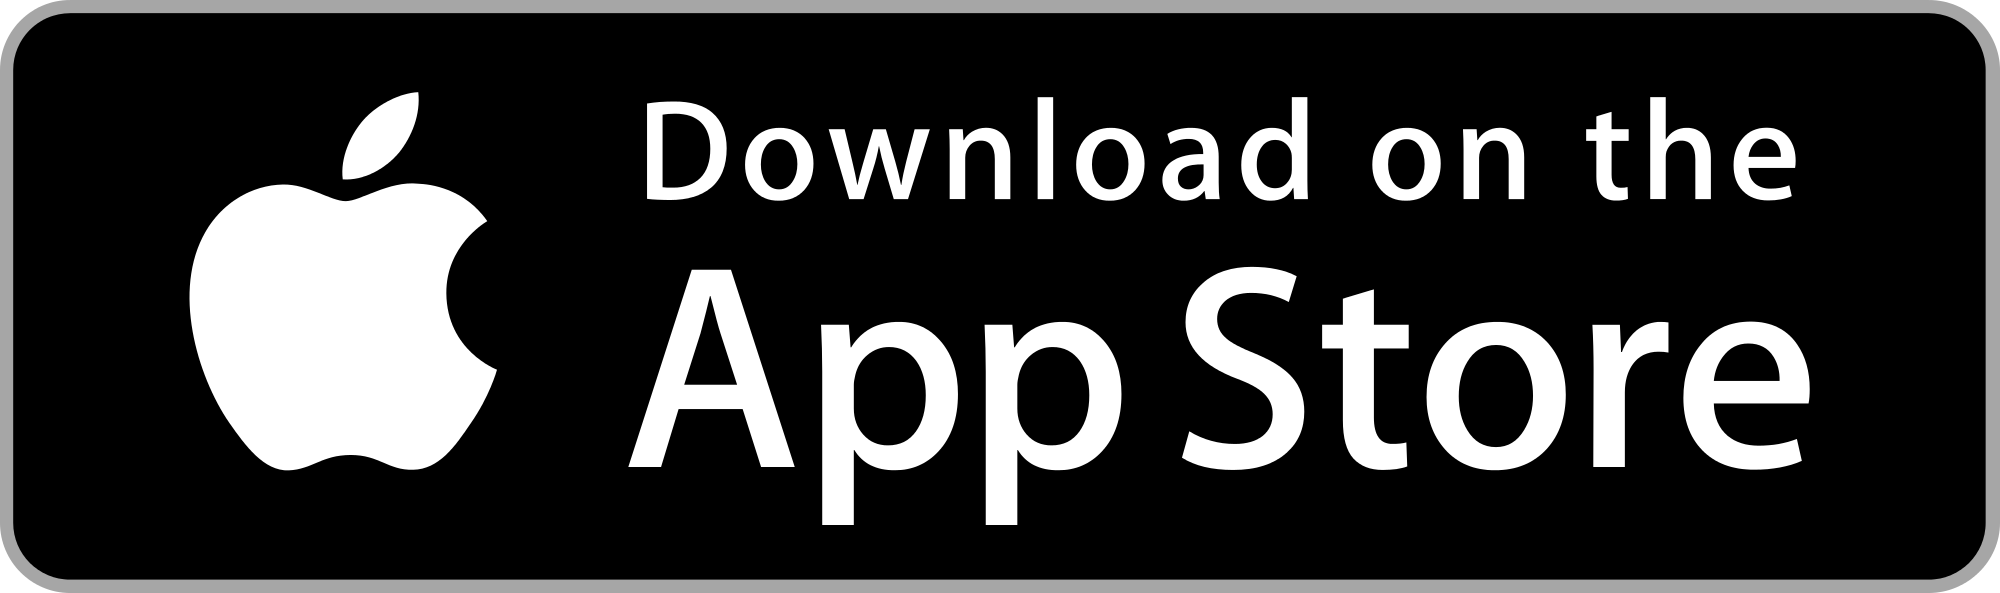 app_store_download.png